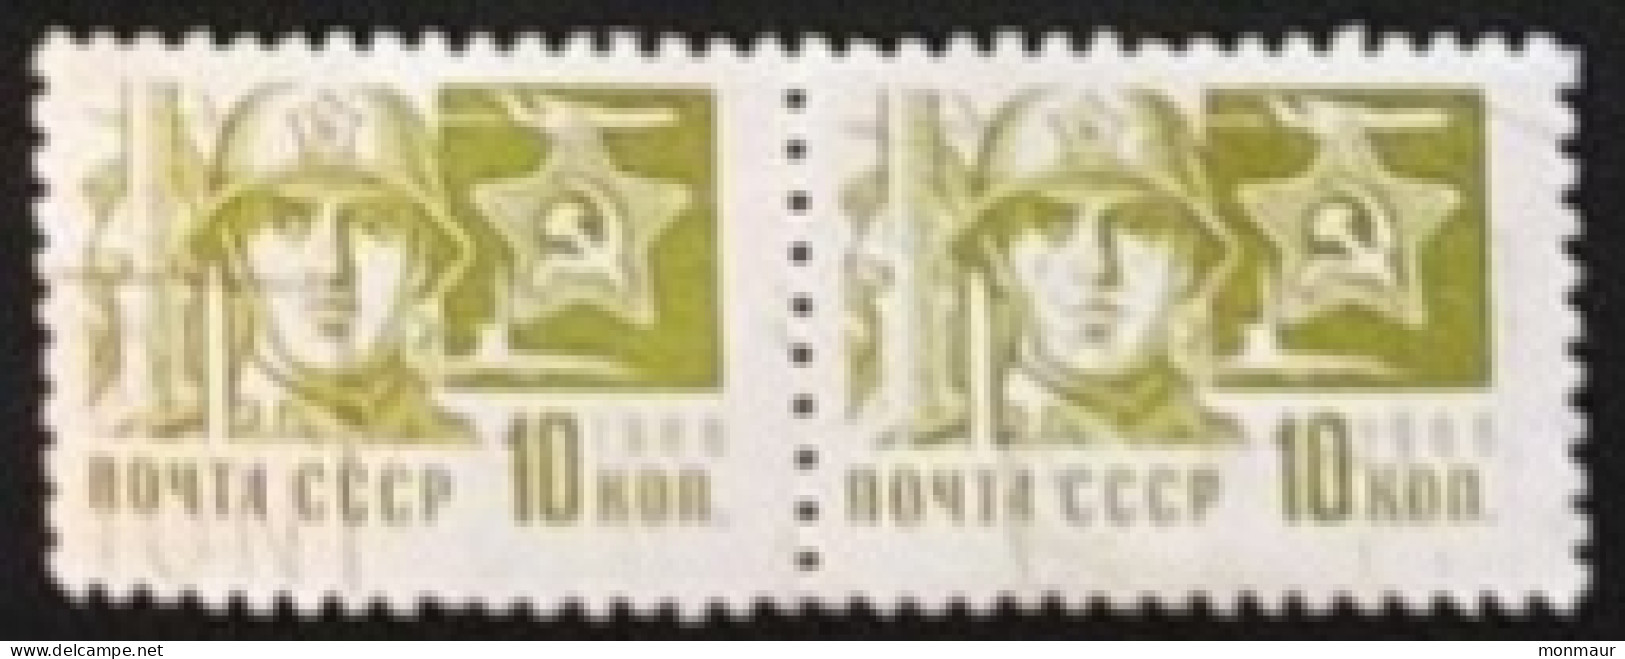 URSS  1966 SOCIETE' ET TECHNOLOGIE - Used Stamps